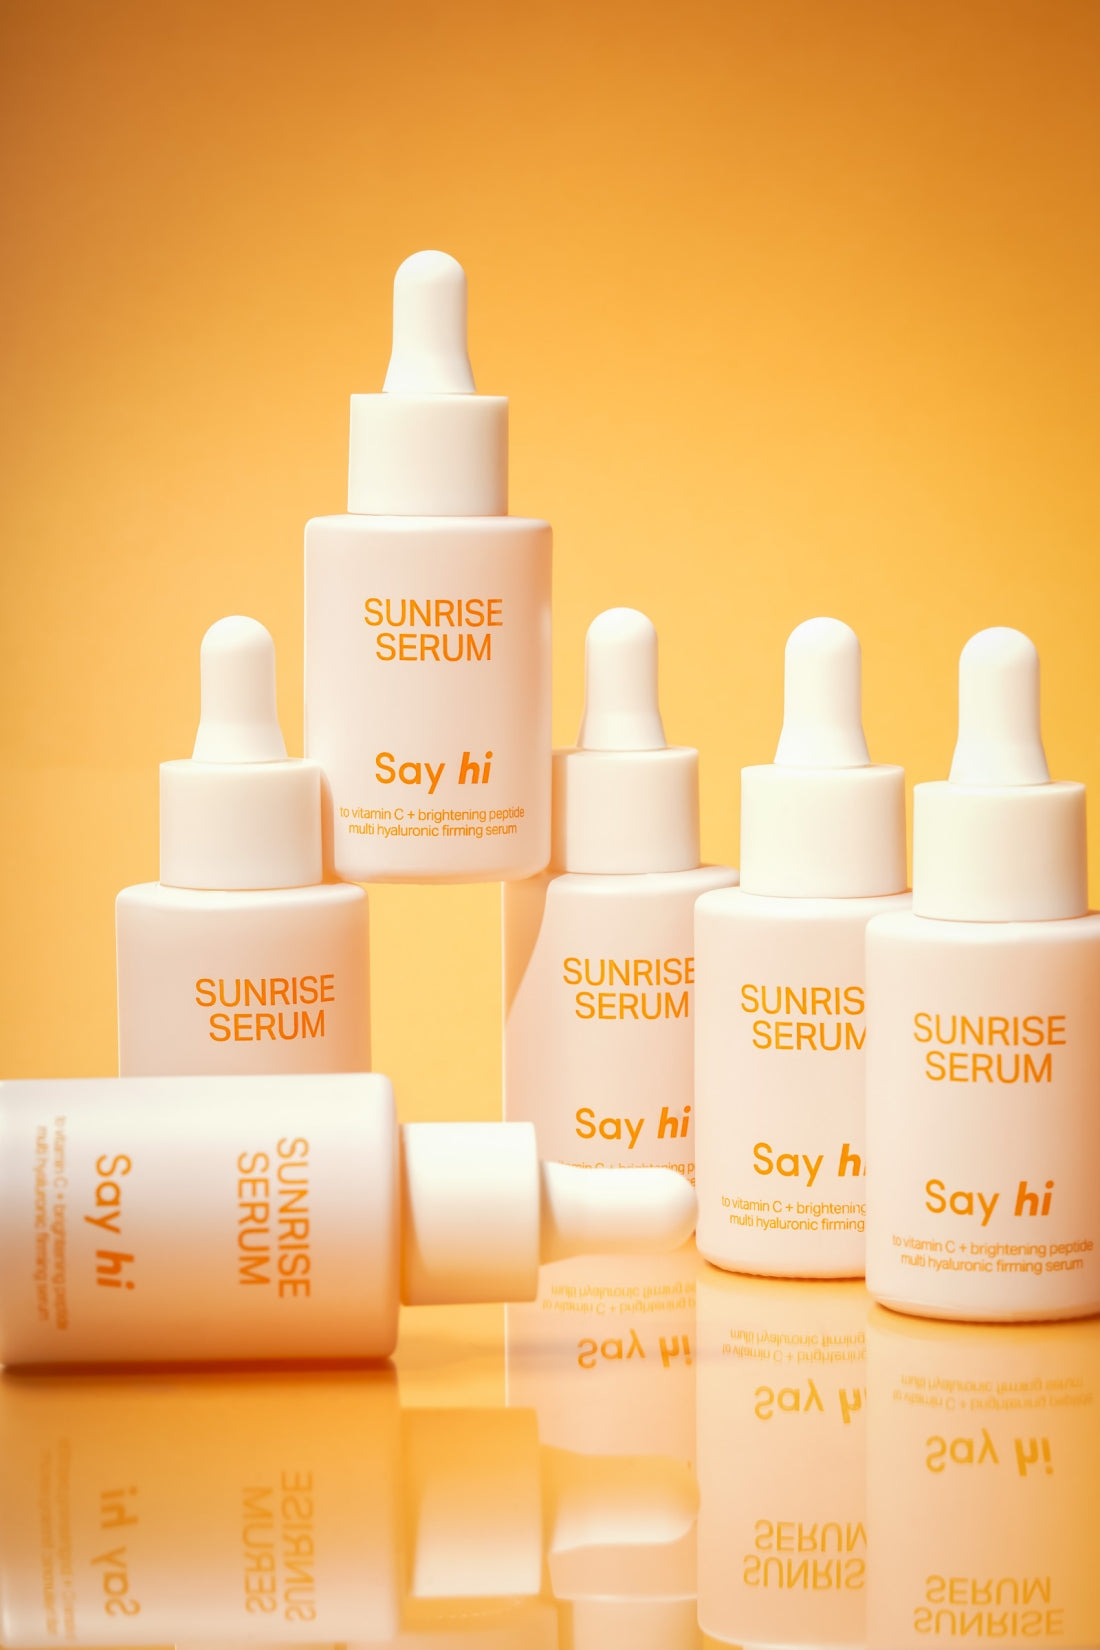 SUNRISE SERUM vitamin C + brightening peptide multi hyaluronic firming serum